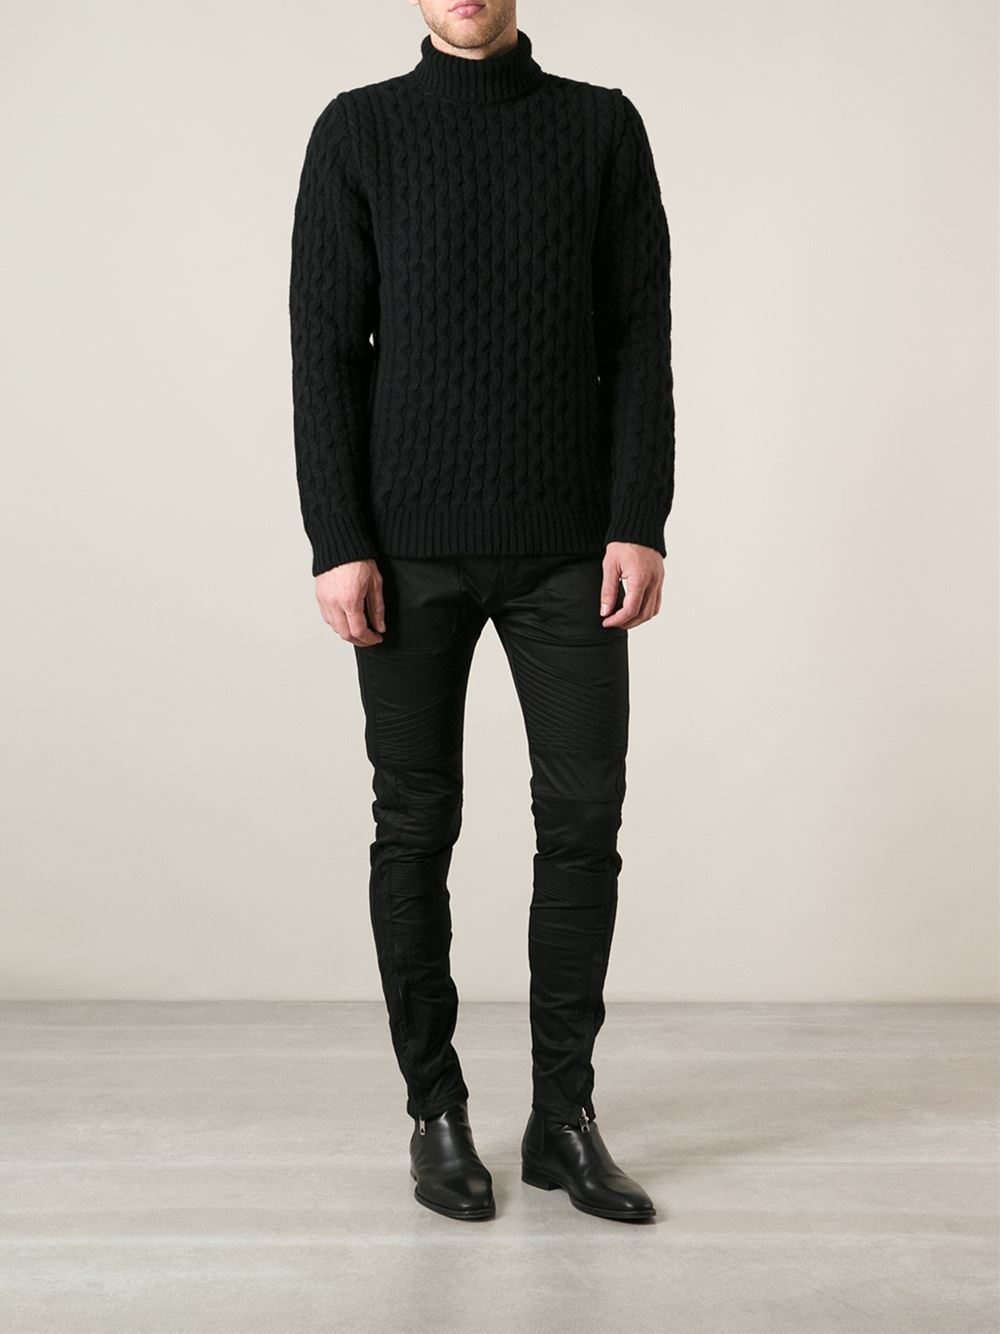 Lyst - Diesel Cable Knit Turtleneck Sweater in Black for Men